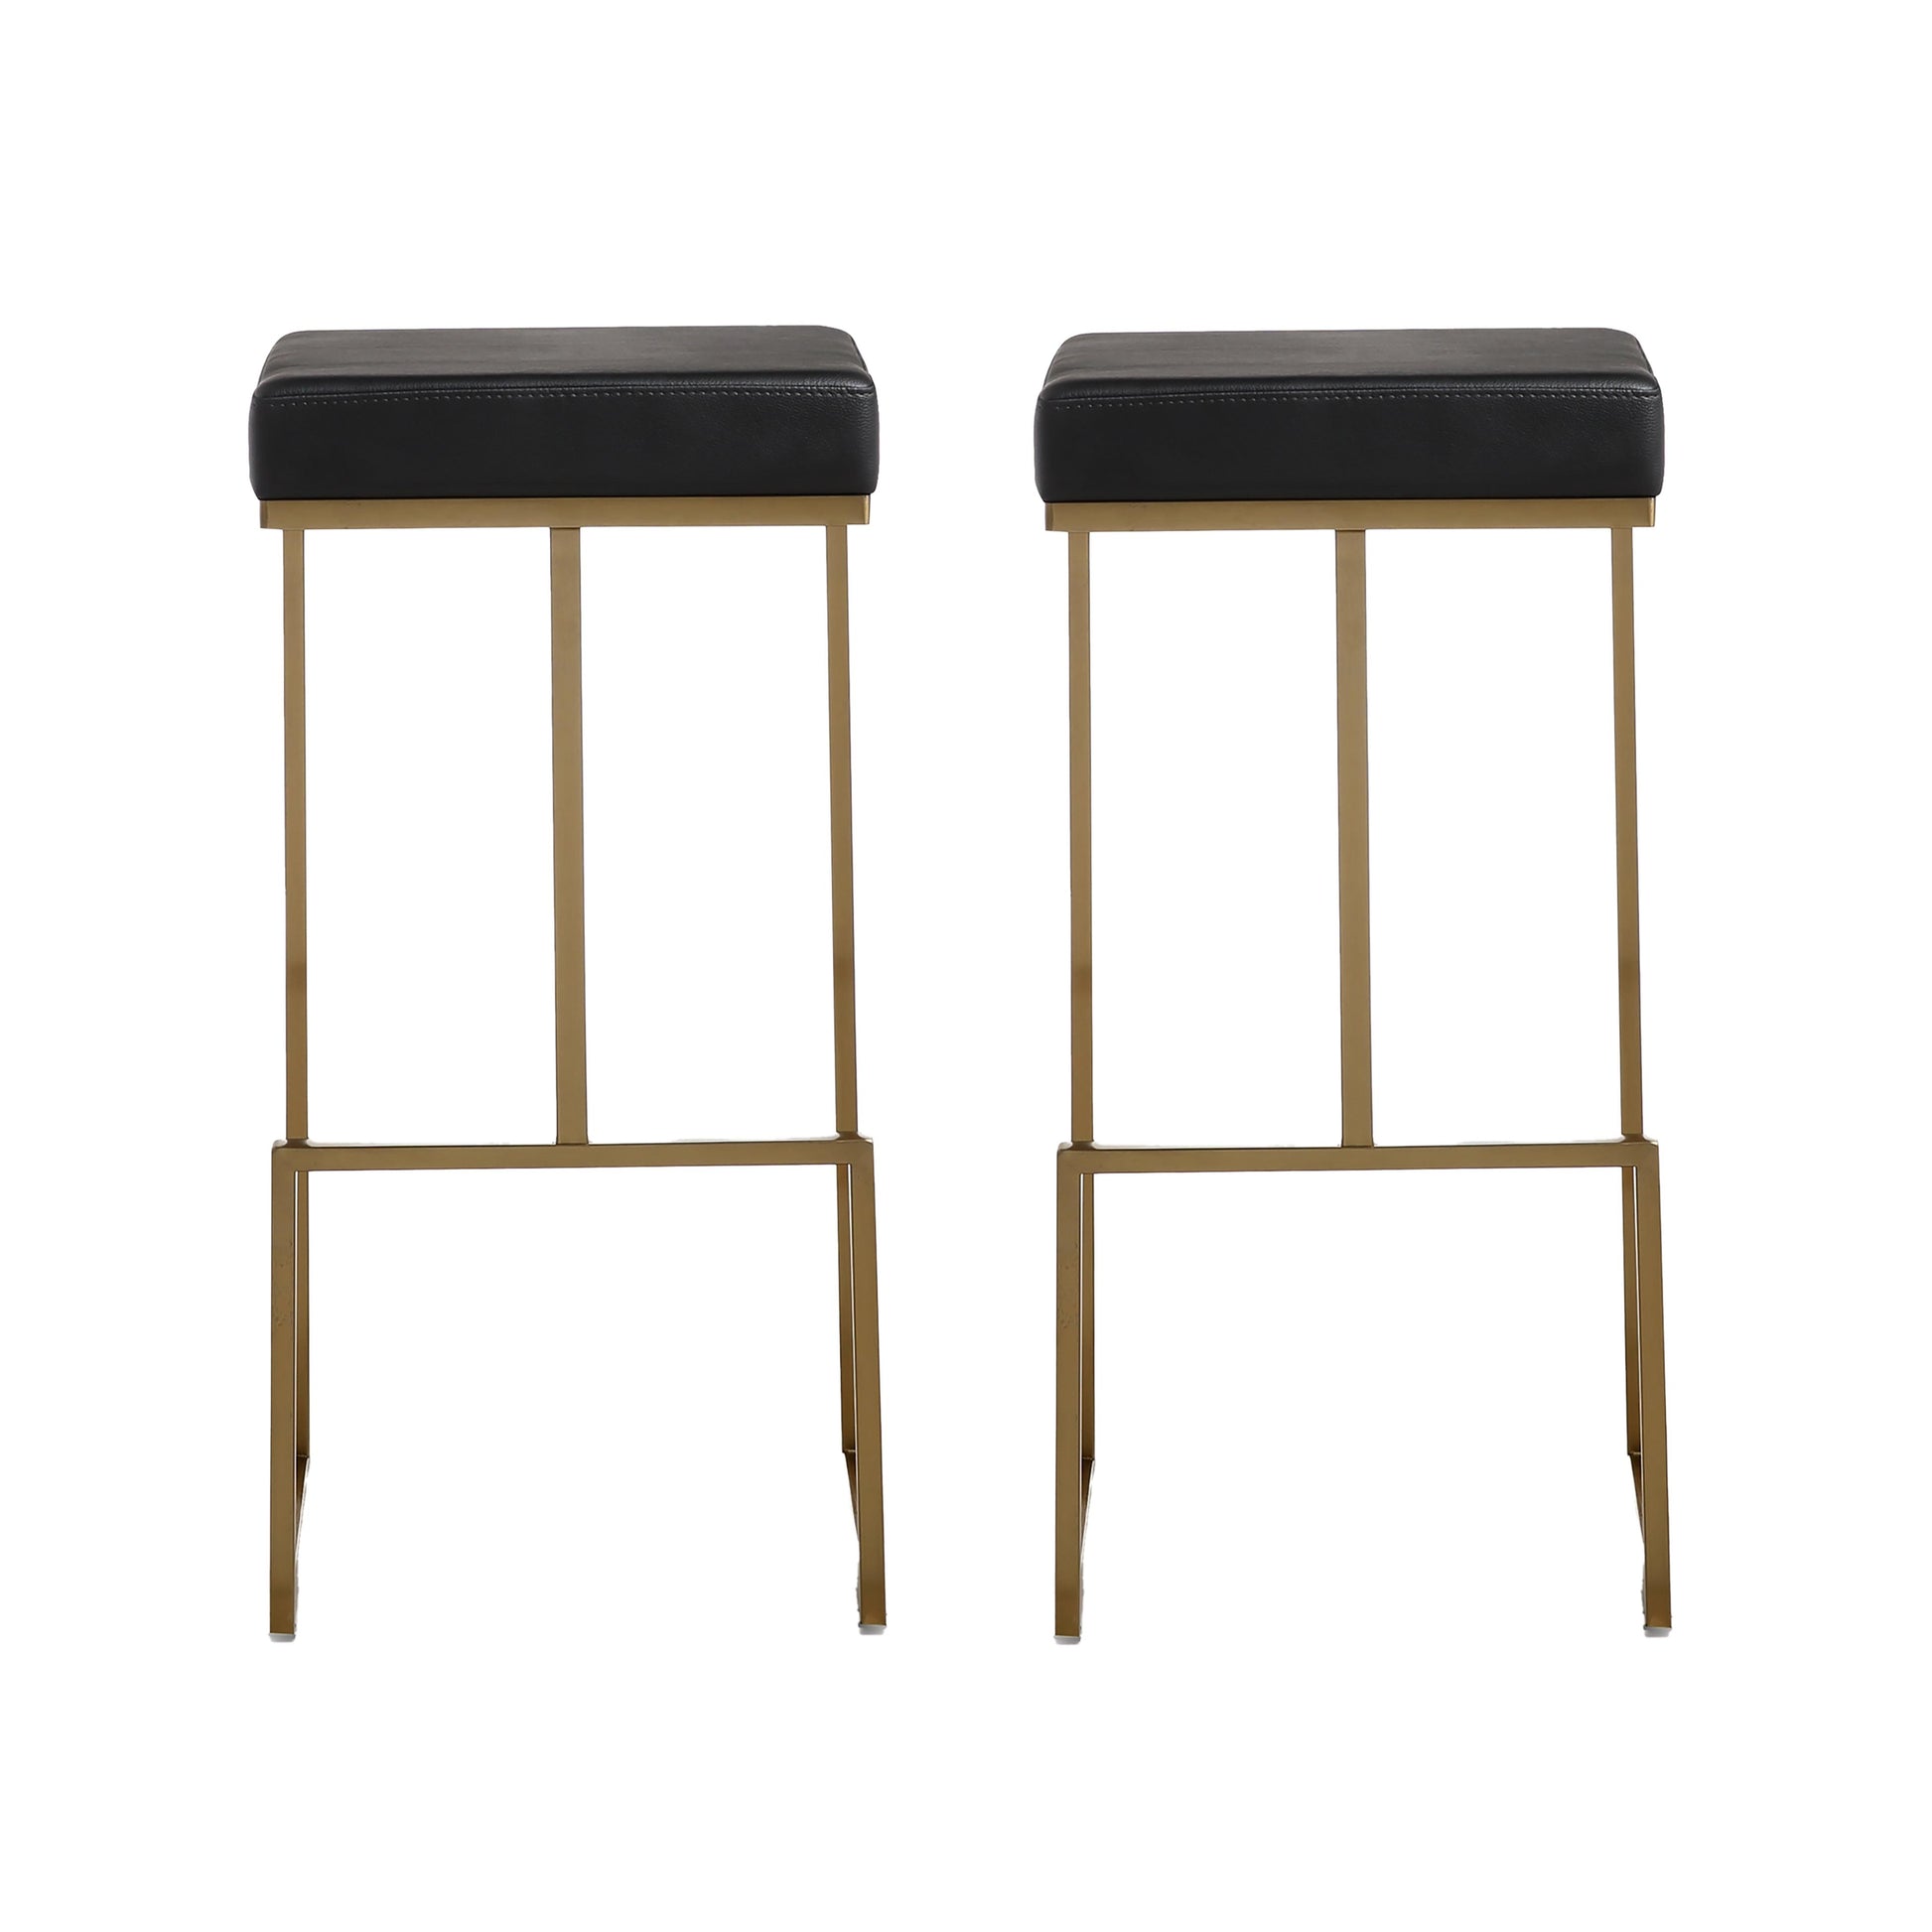 Tov Furniture Ferra Black Gold Steel Barstool Set of 2